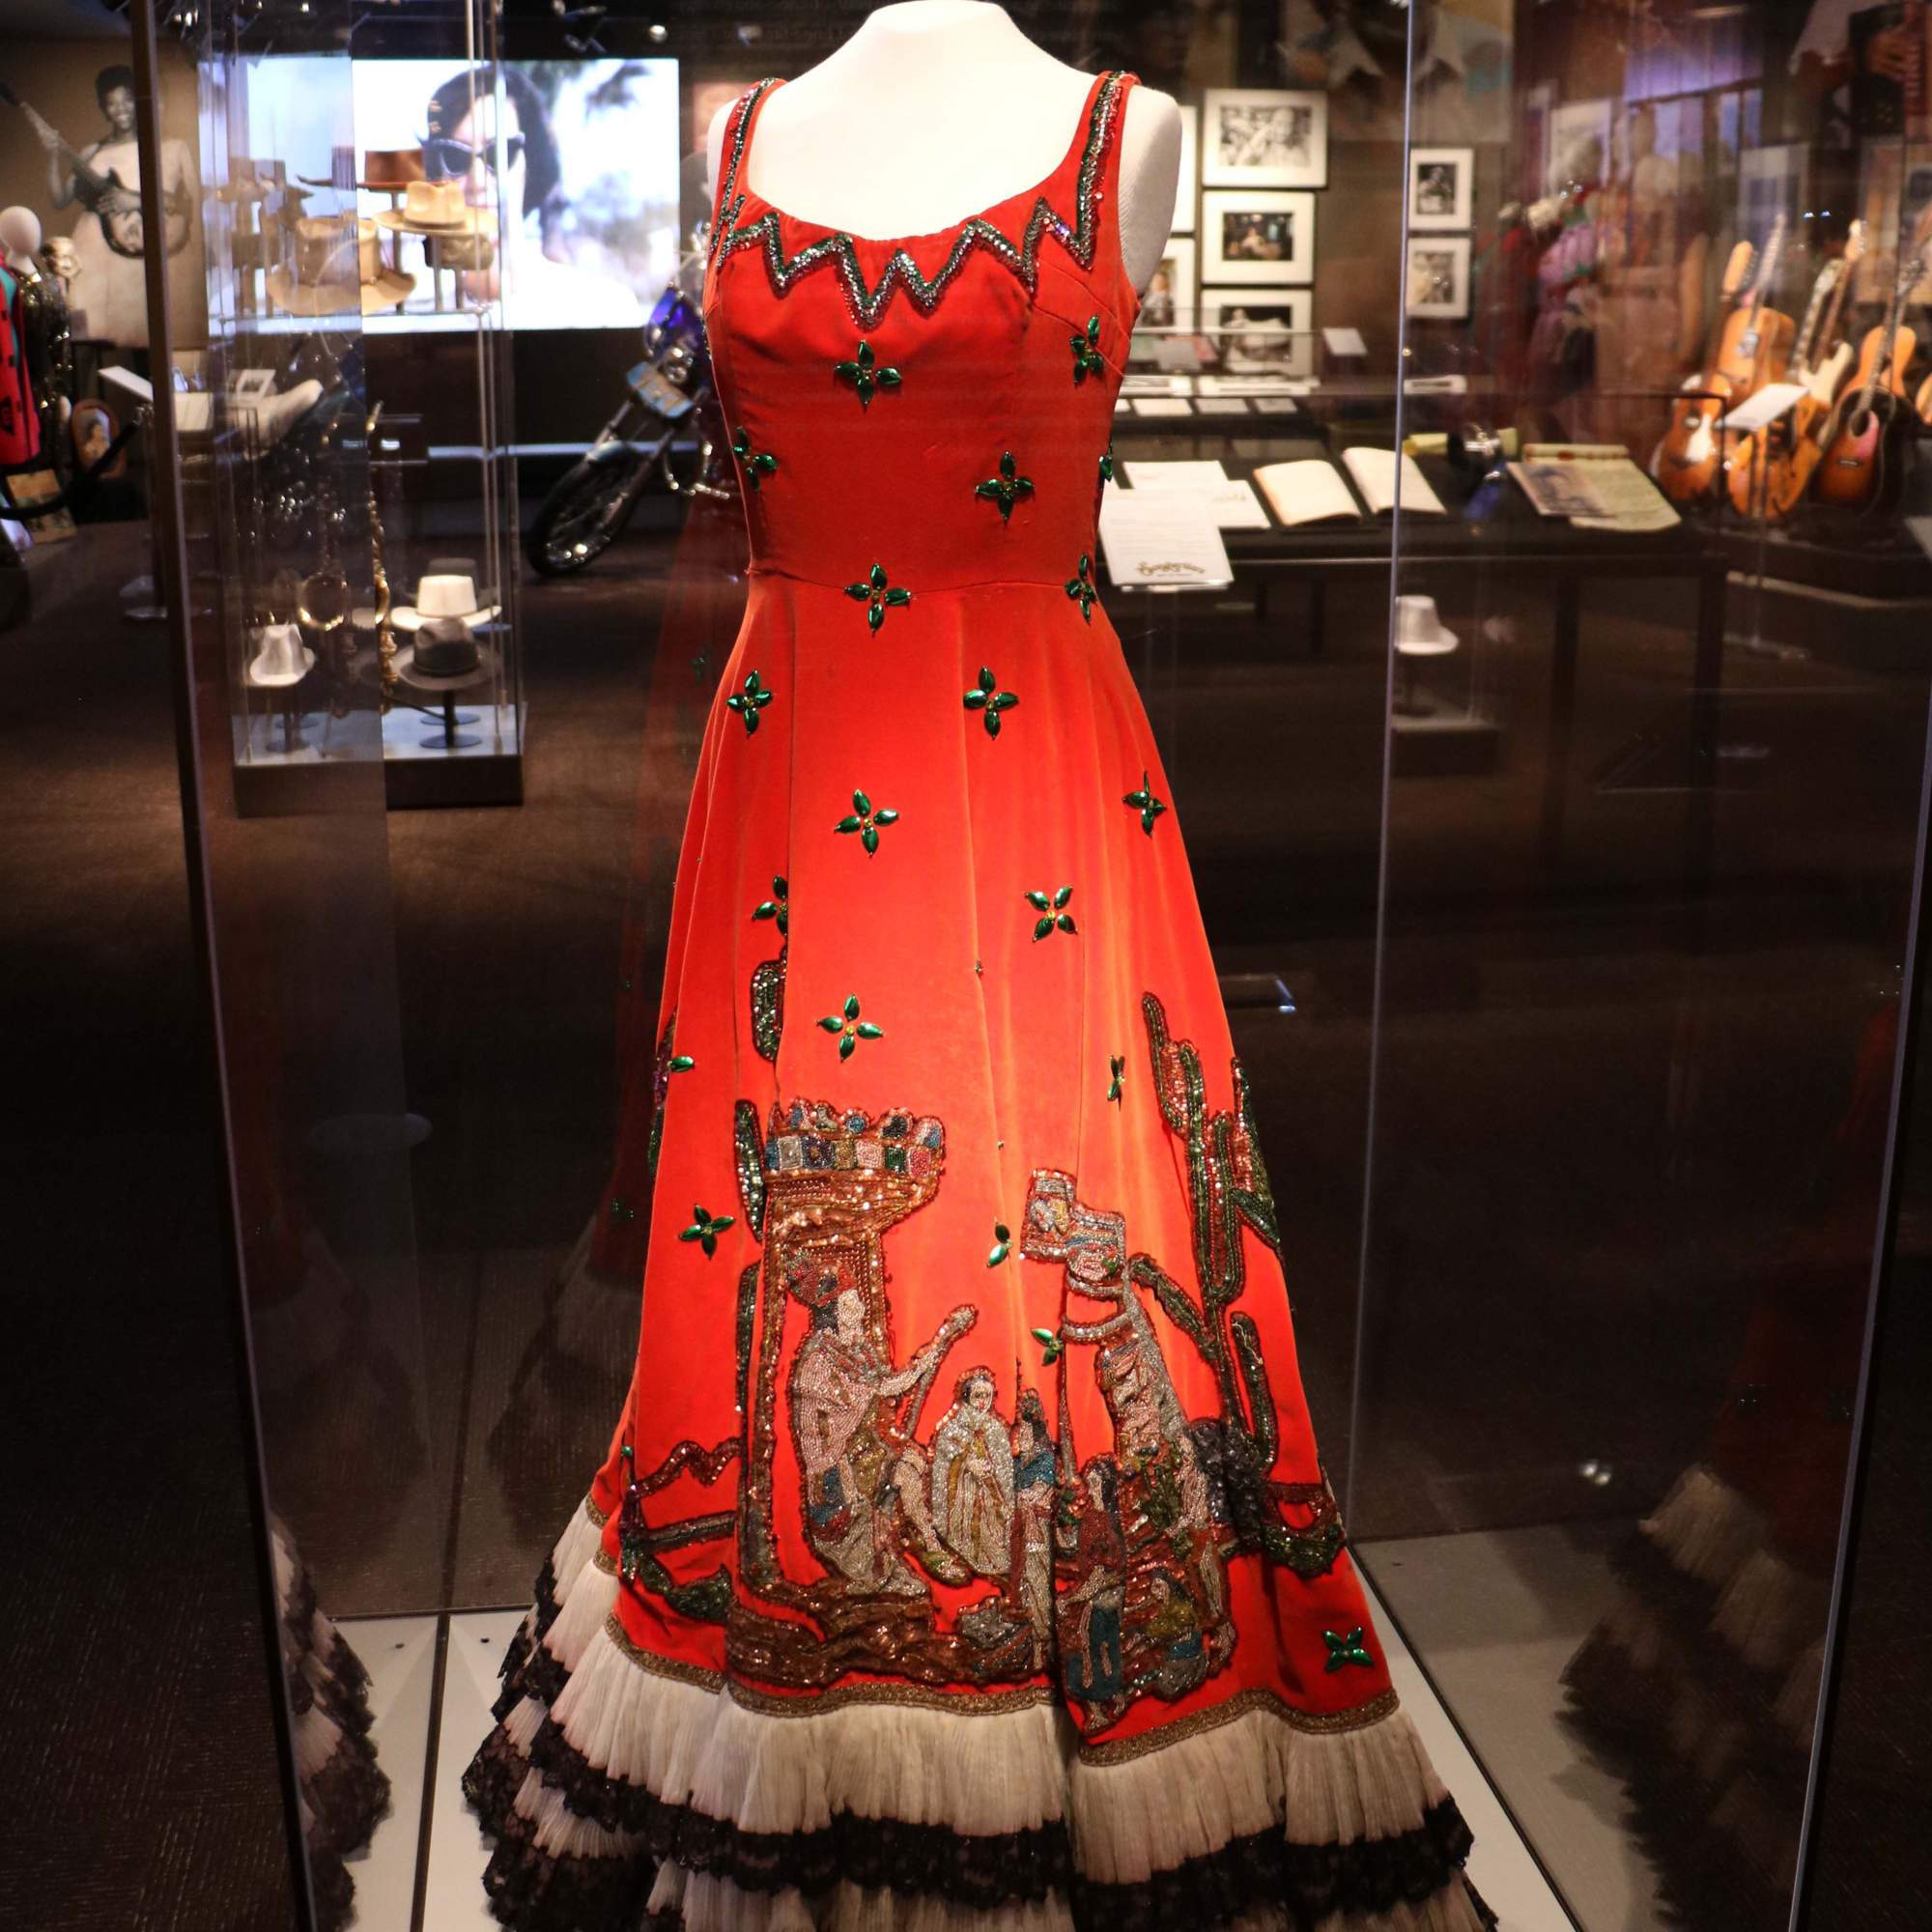 Photo of dress on display